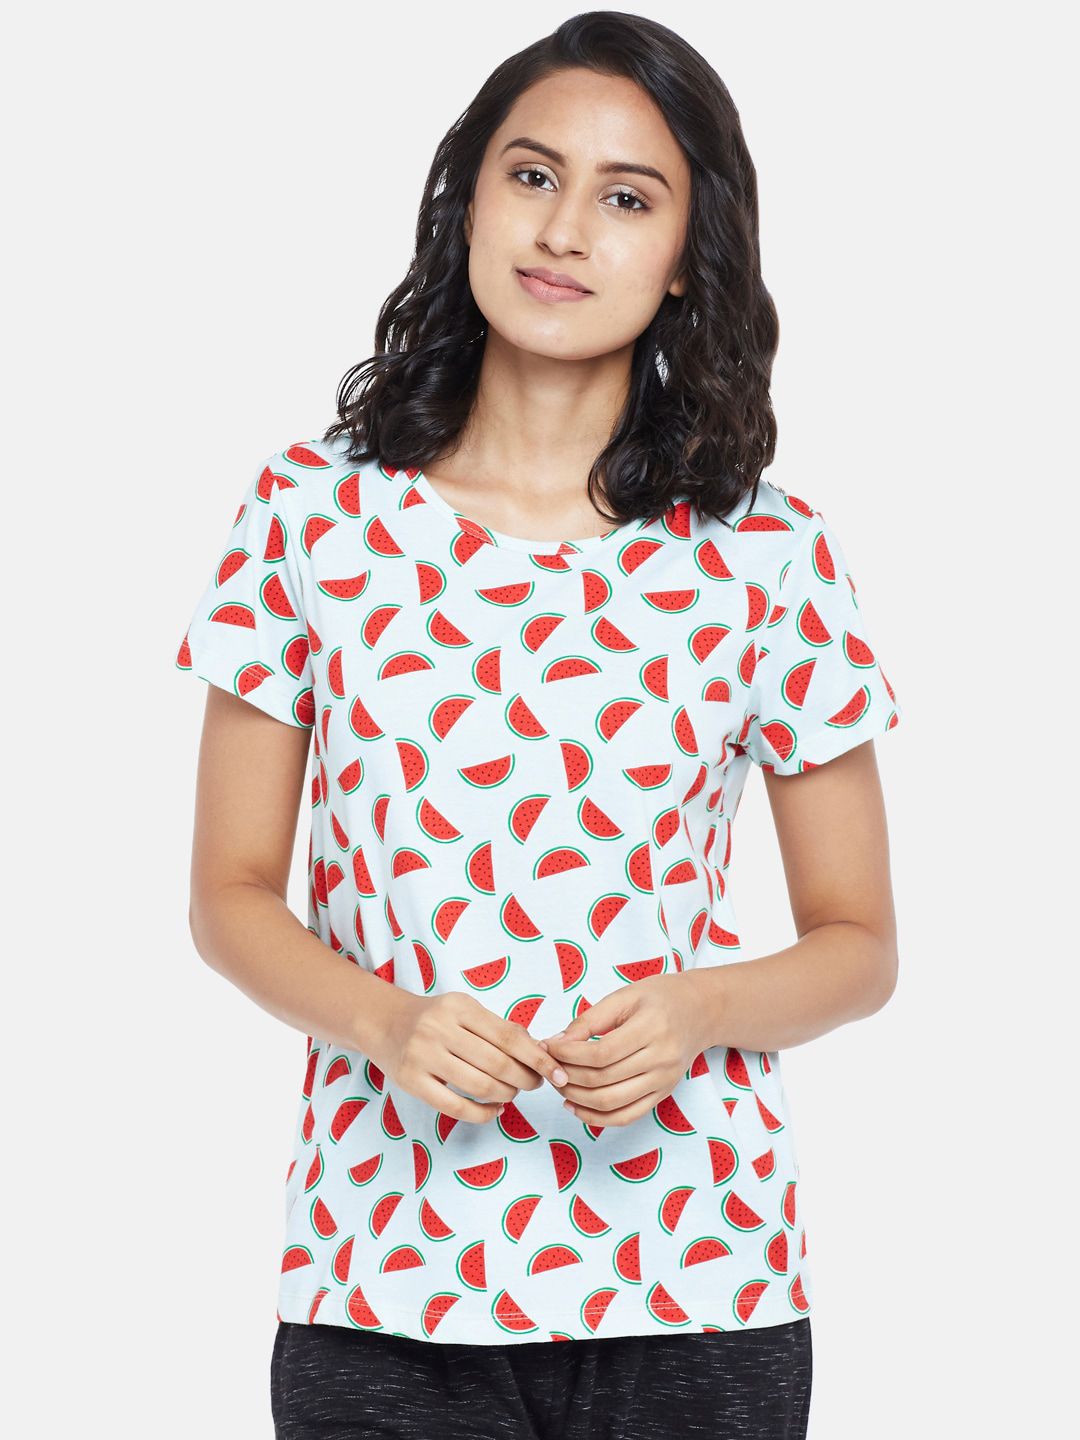 Dreamz by Pantaloons Women White & Red Printed Regular Lounge T-shirt Price in India